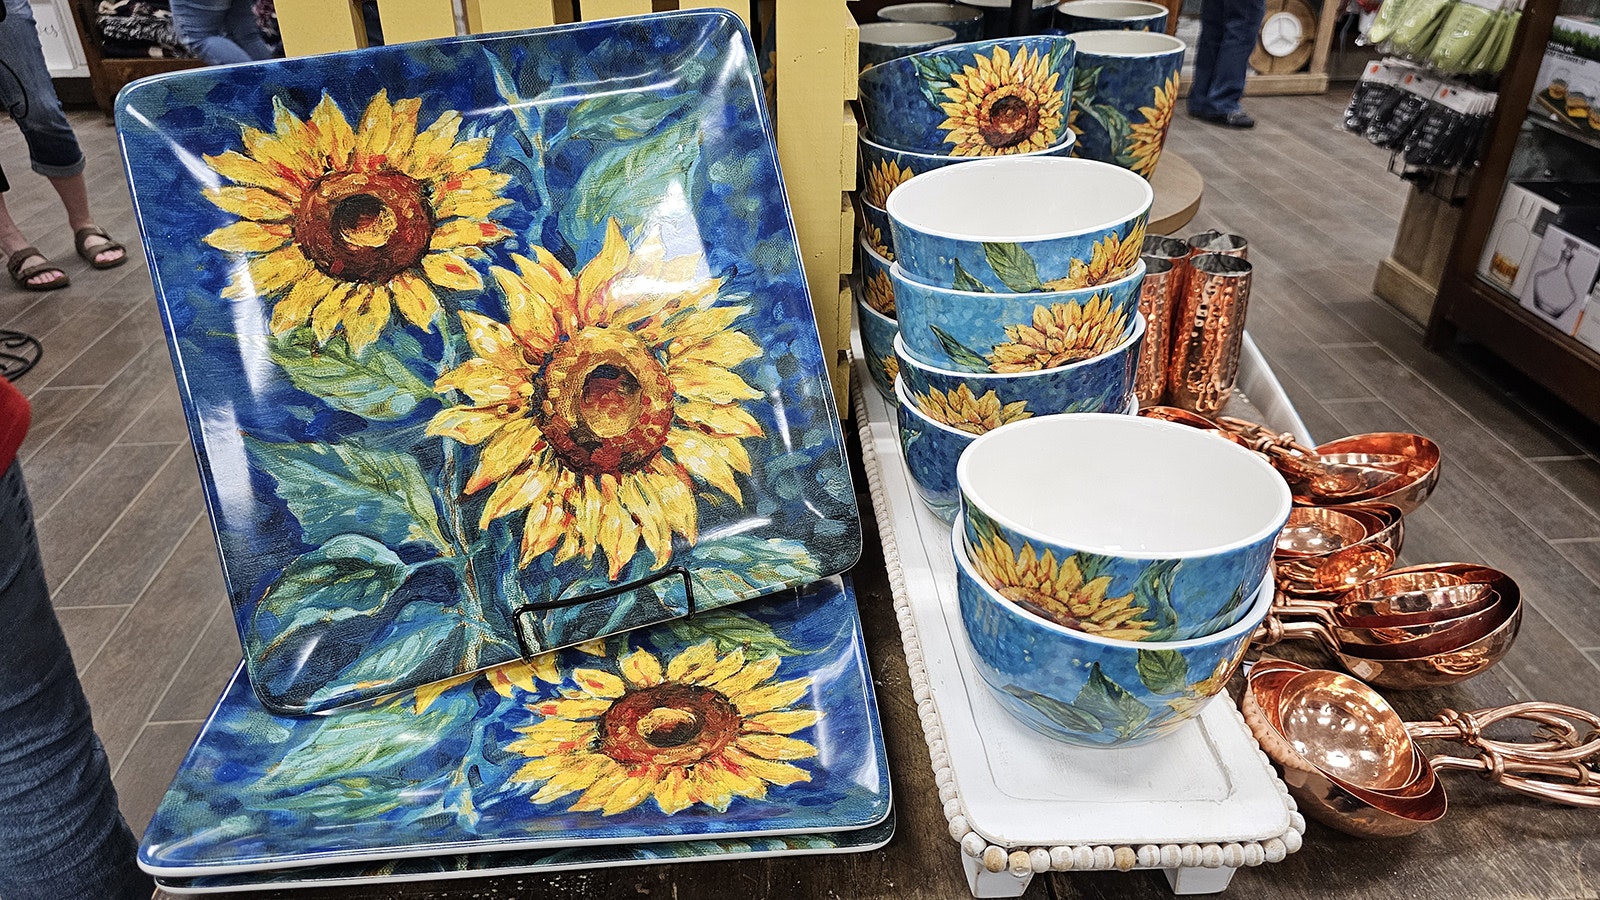 Sunflower plates channeling Van Gogh.